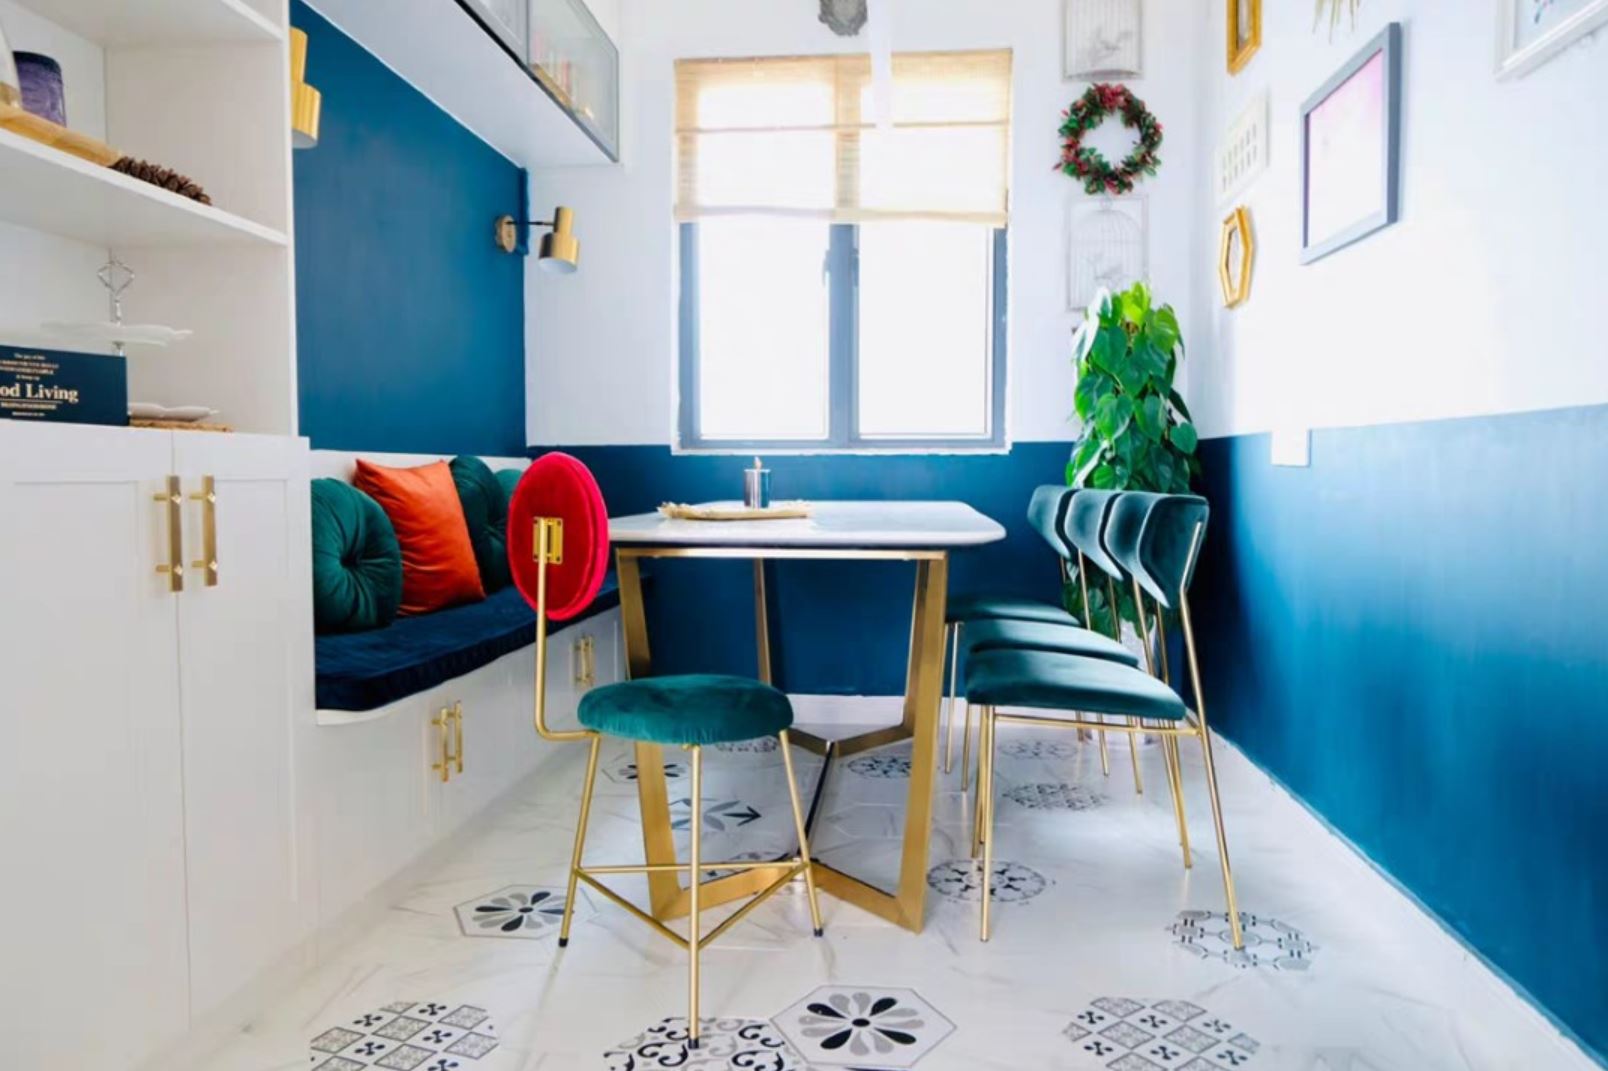 ZARA Nordic Designer Dining Office Chair